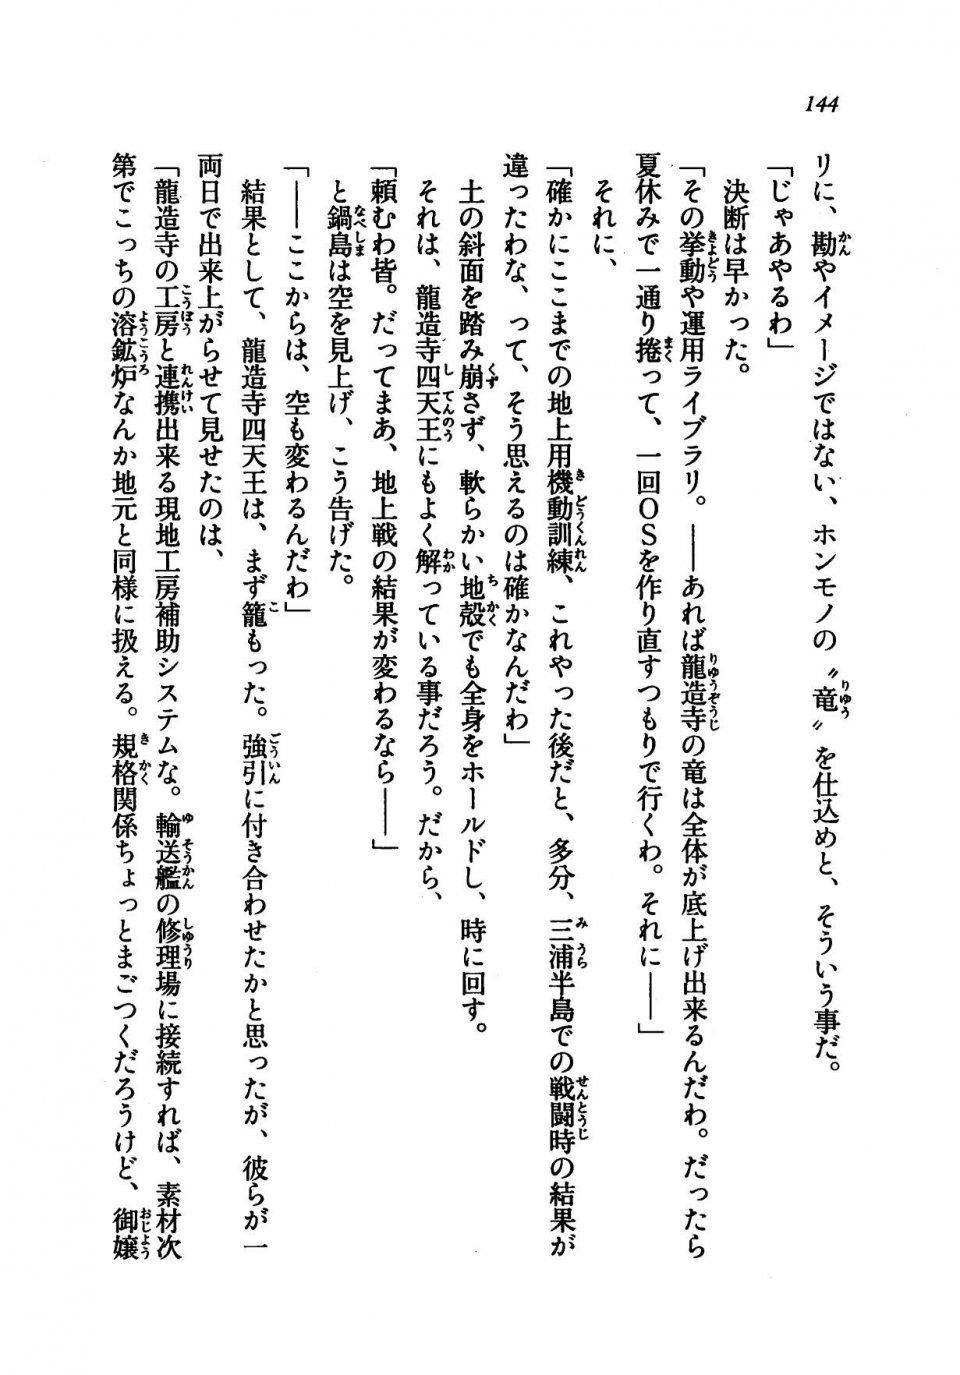 Kyoukai Senjou no Horizon LN Vol 21(8C) Part 1 - Photo #143